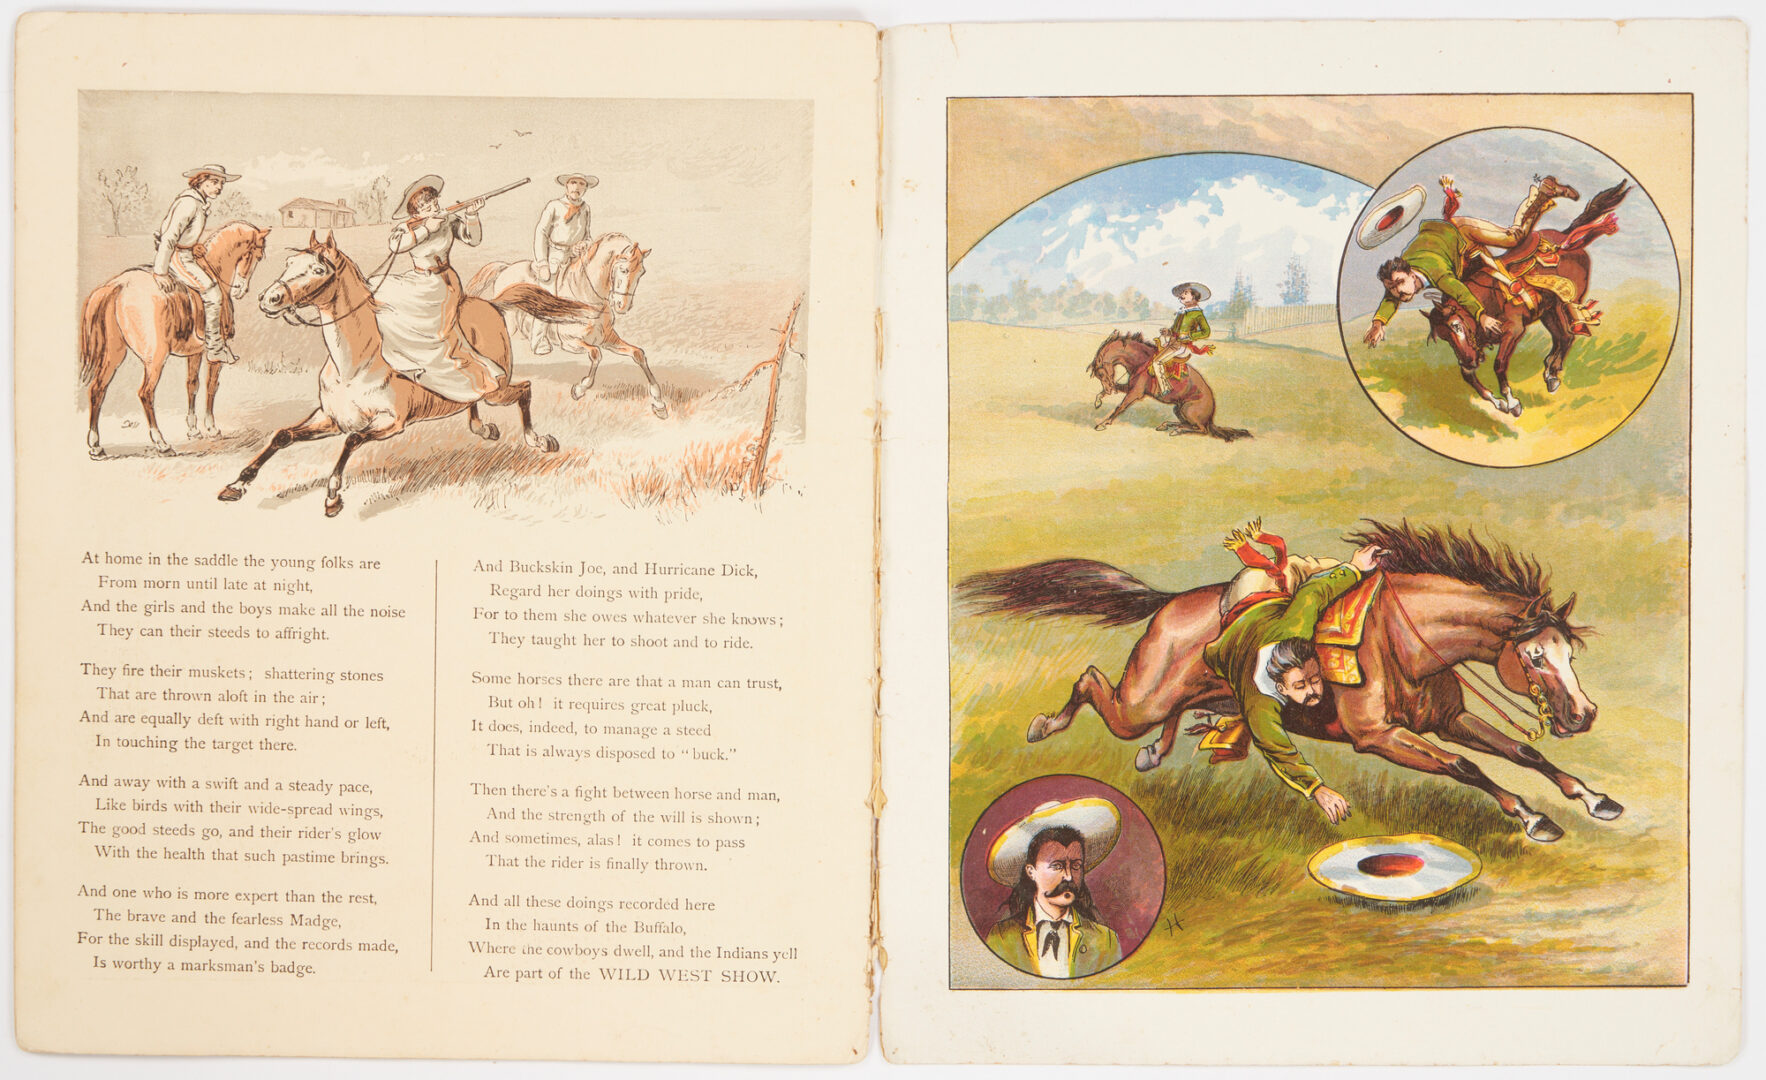 Lot 691: 4 Buffalo Bill Pubs., incl. Children's Book, Programs, Magazine, 11 items